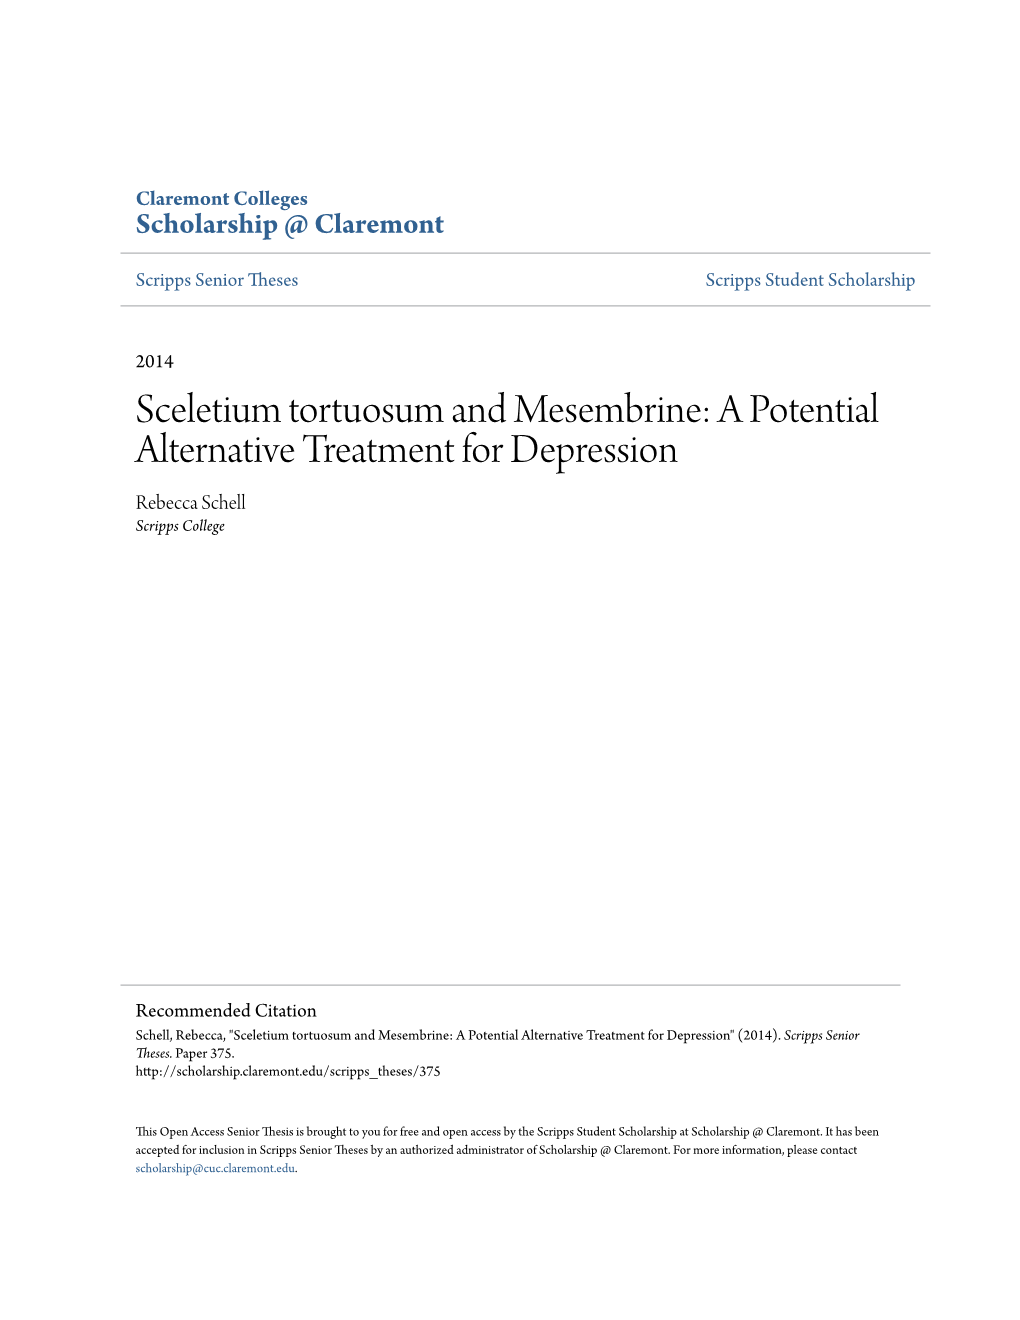 Sceletium Tortuosum and Mesembrine: a Potential Alternative Treatment for Depression Rebecca Schell Scripps College